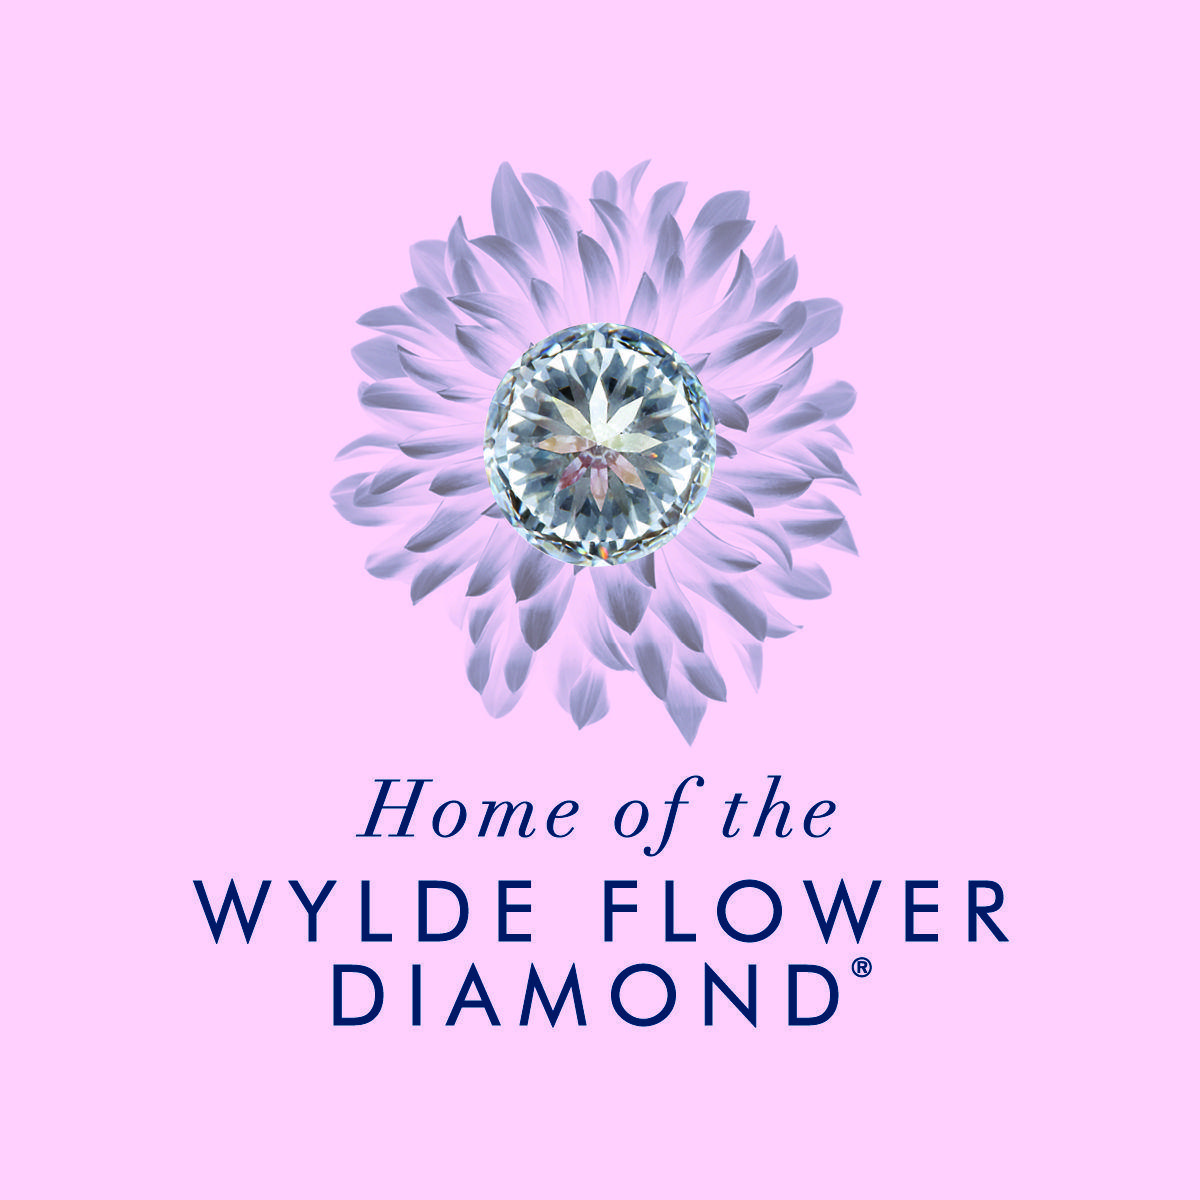 Flower and Diamonds Logo - THE WYLDE FLOWER DIAMOND® STORY